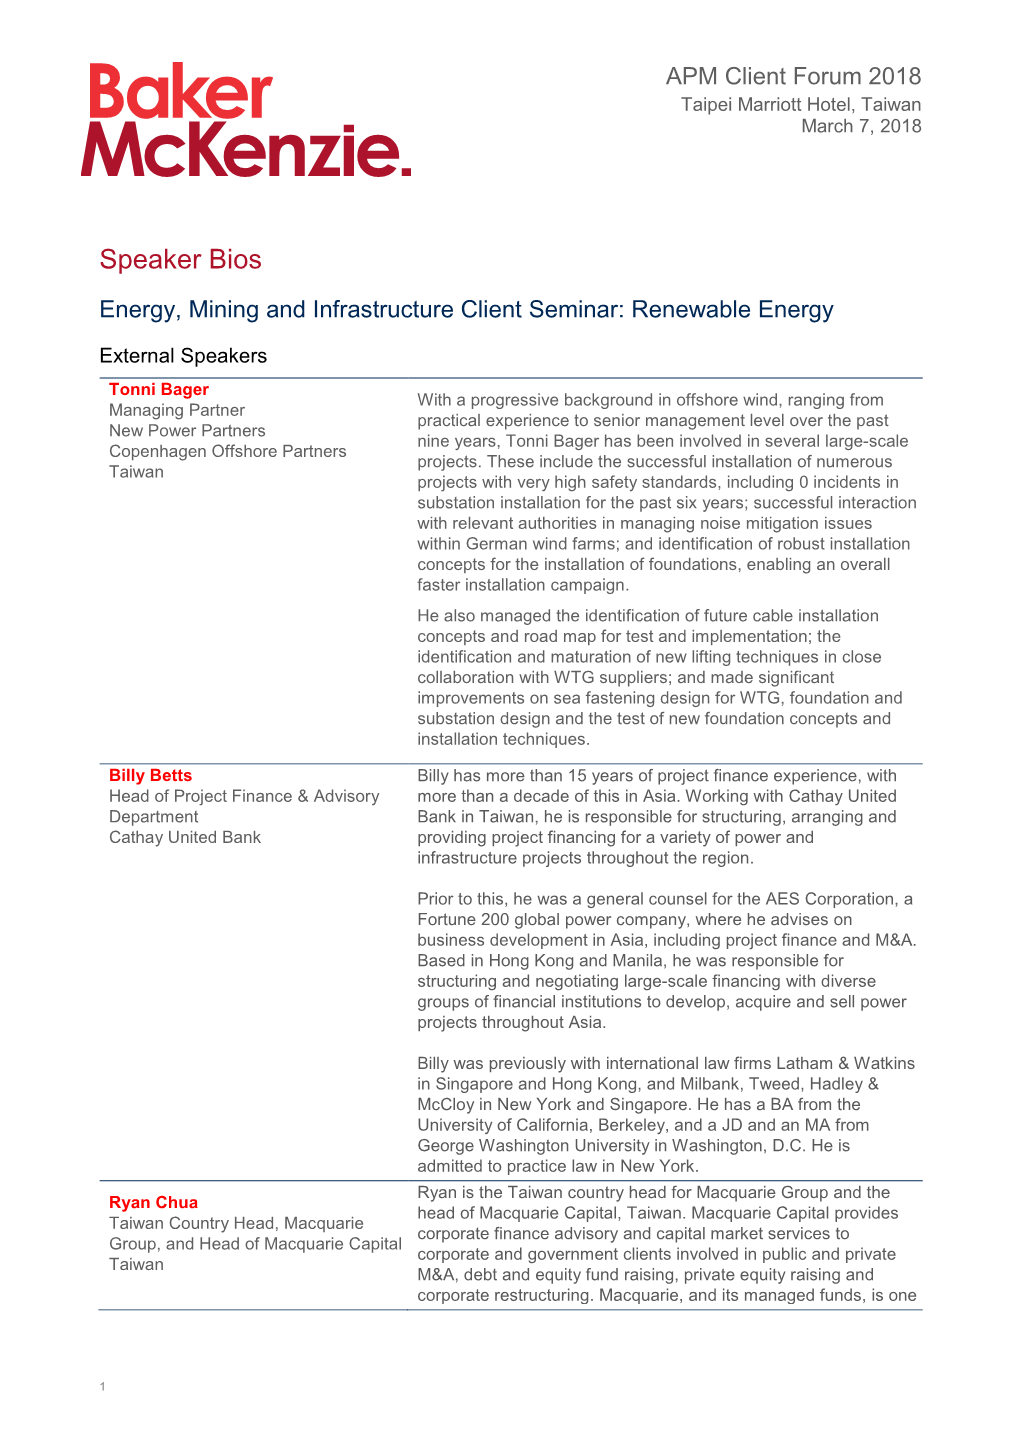 Speaker Bios Energy, Mining and Infrastructure Client Seminar: Renewable Energy